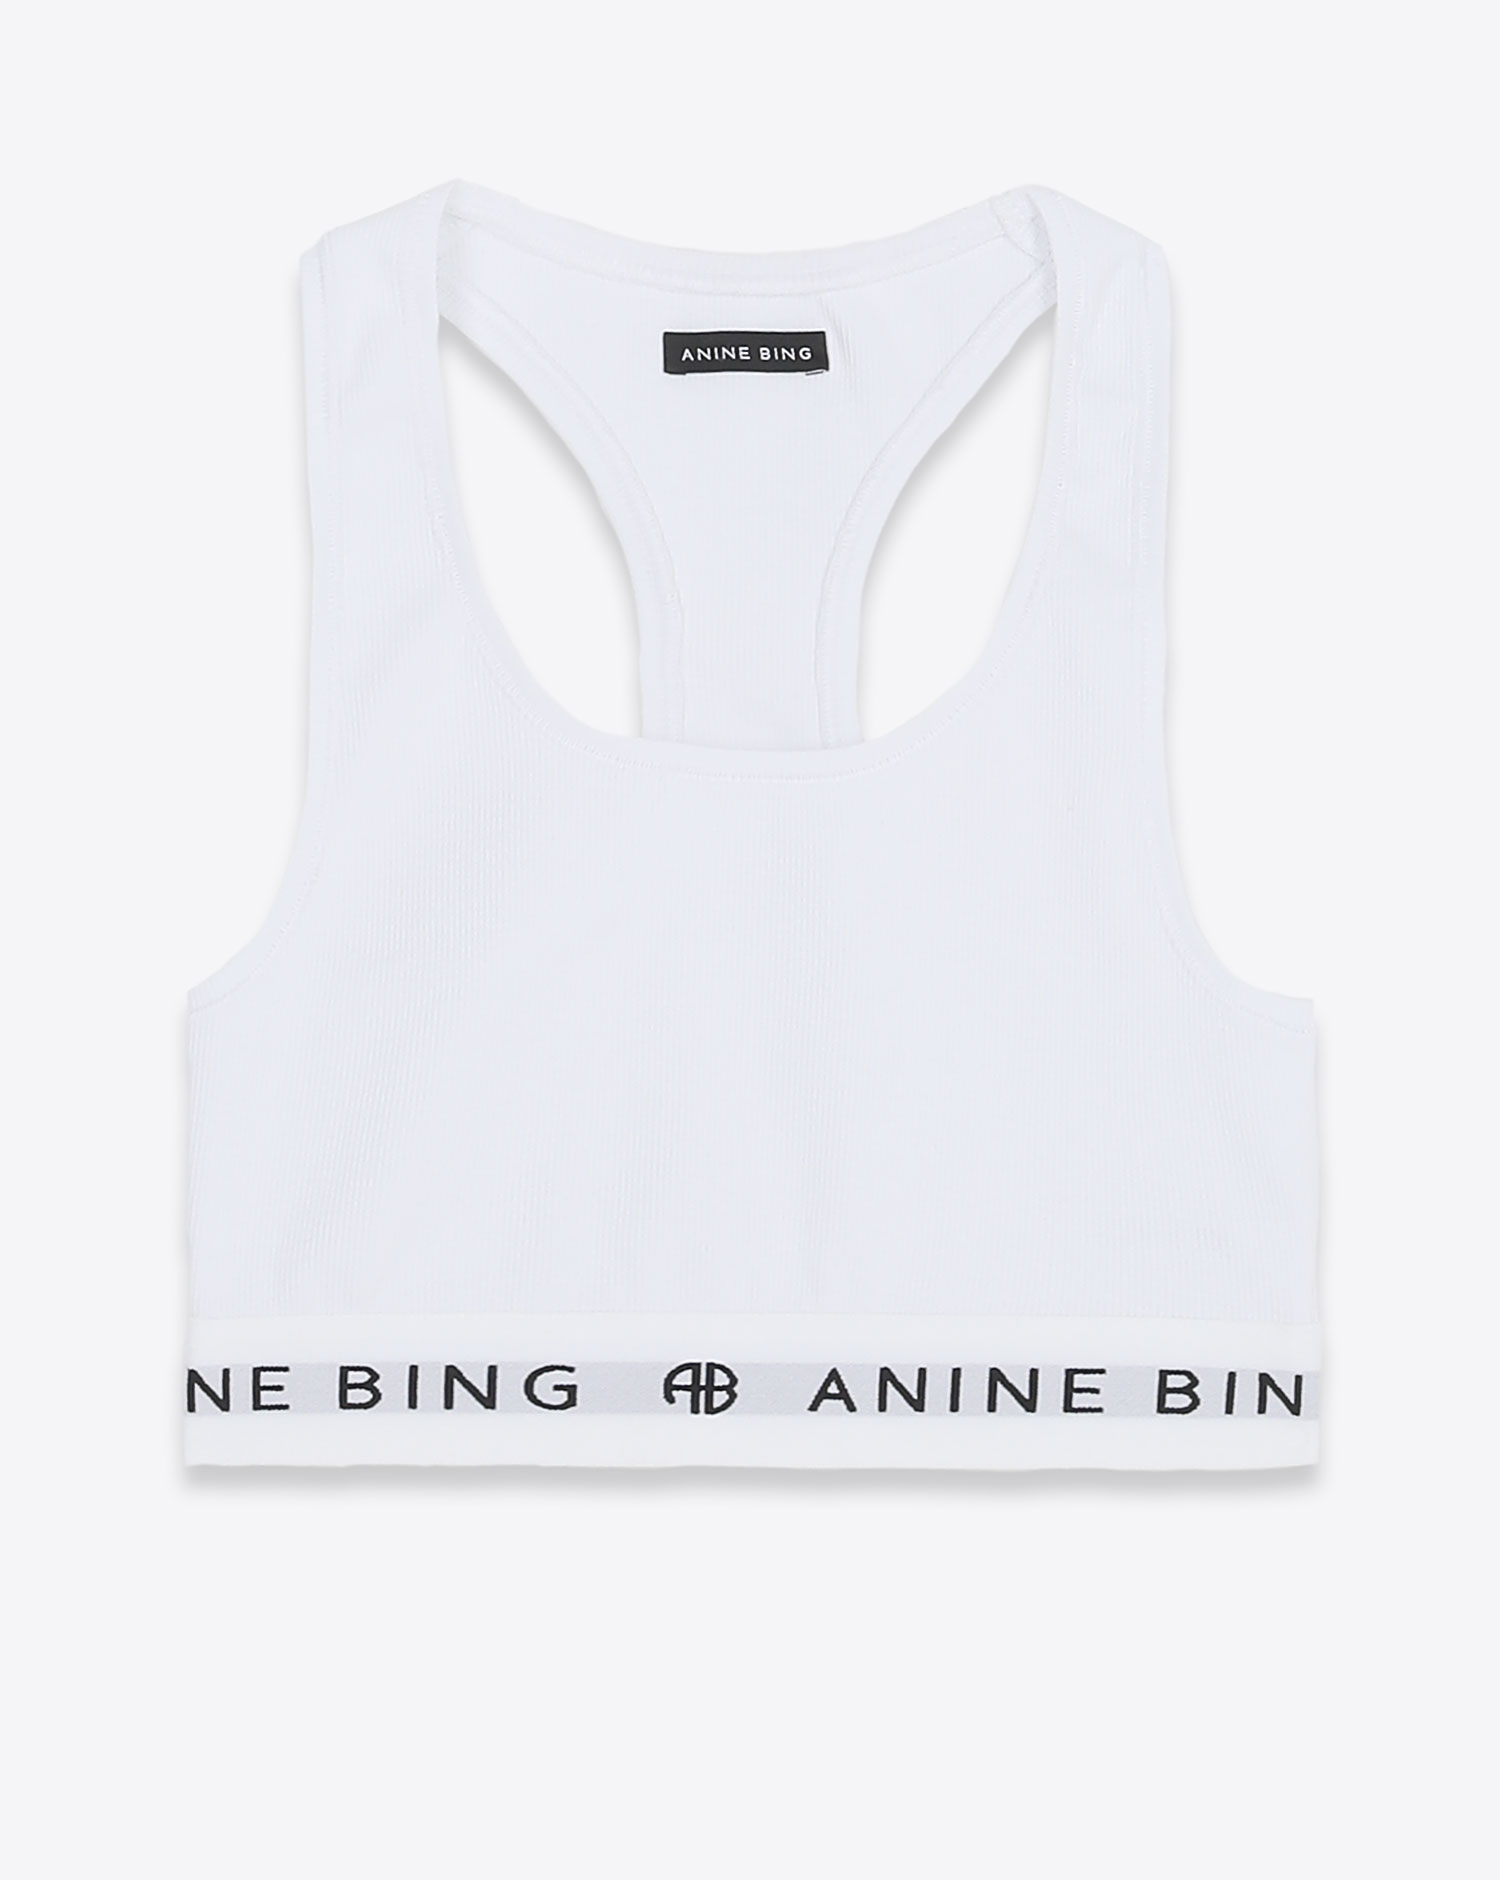 Anine Bing Kels Bra - White